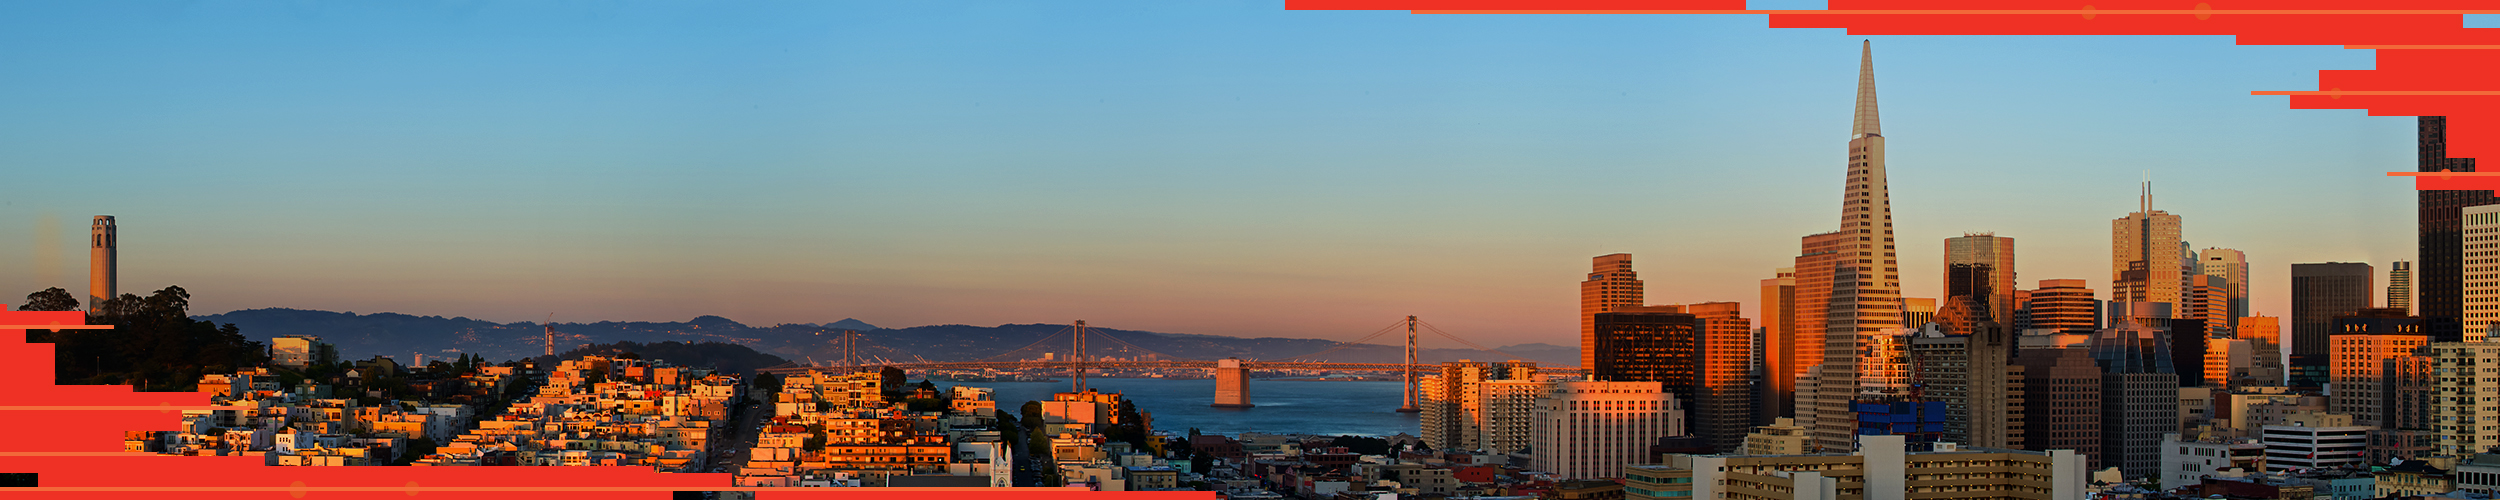 Golden Gate Bridge and San Francisco cityscape, the location of SPIE Photonics West